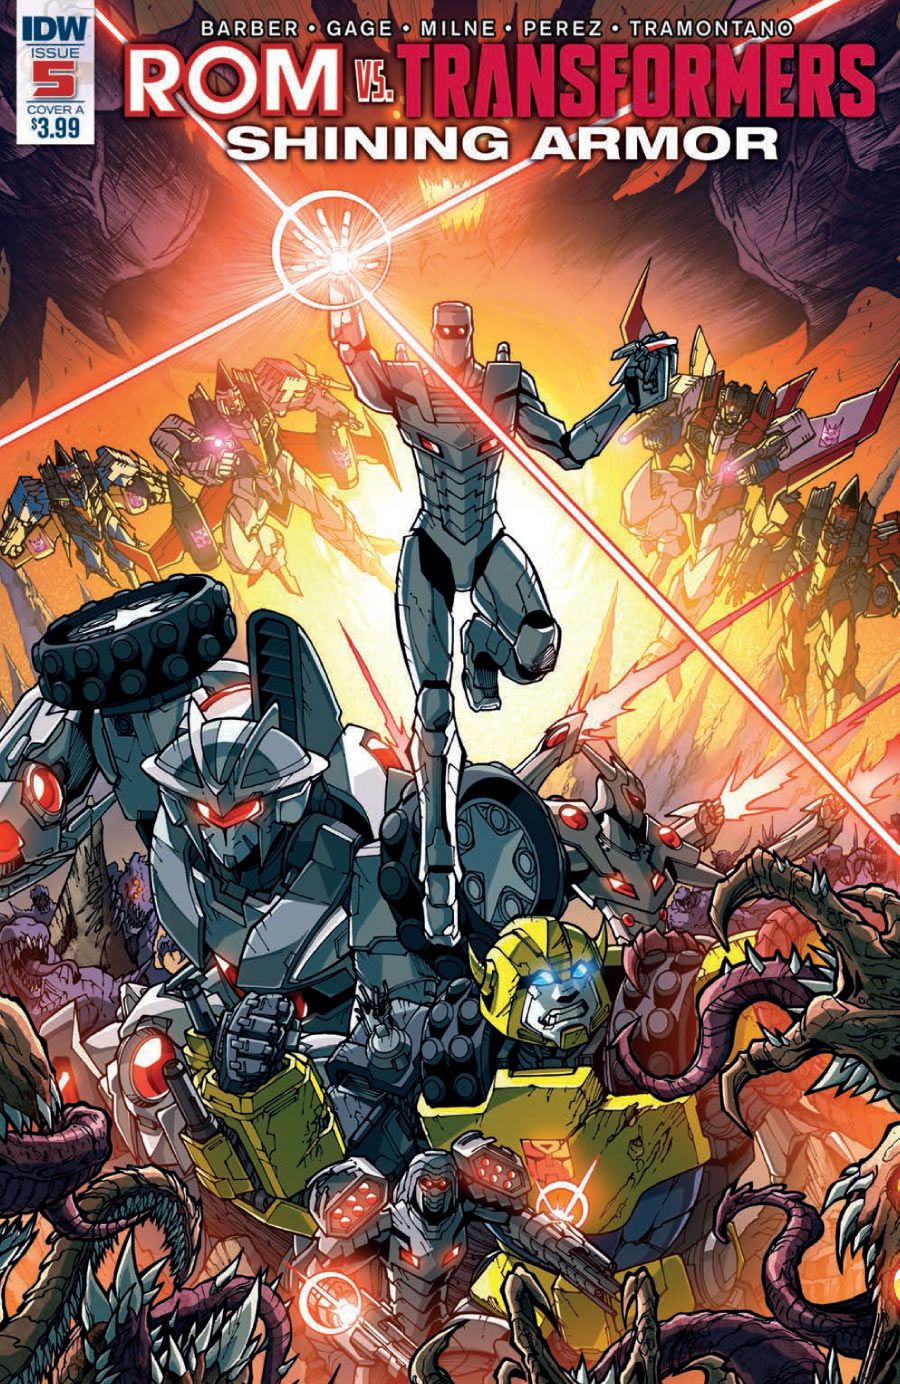 PREVIEW: Rom Vs. Transformers: Shining Armor #5